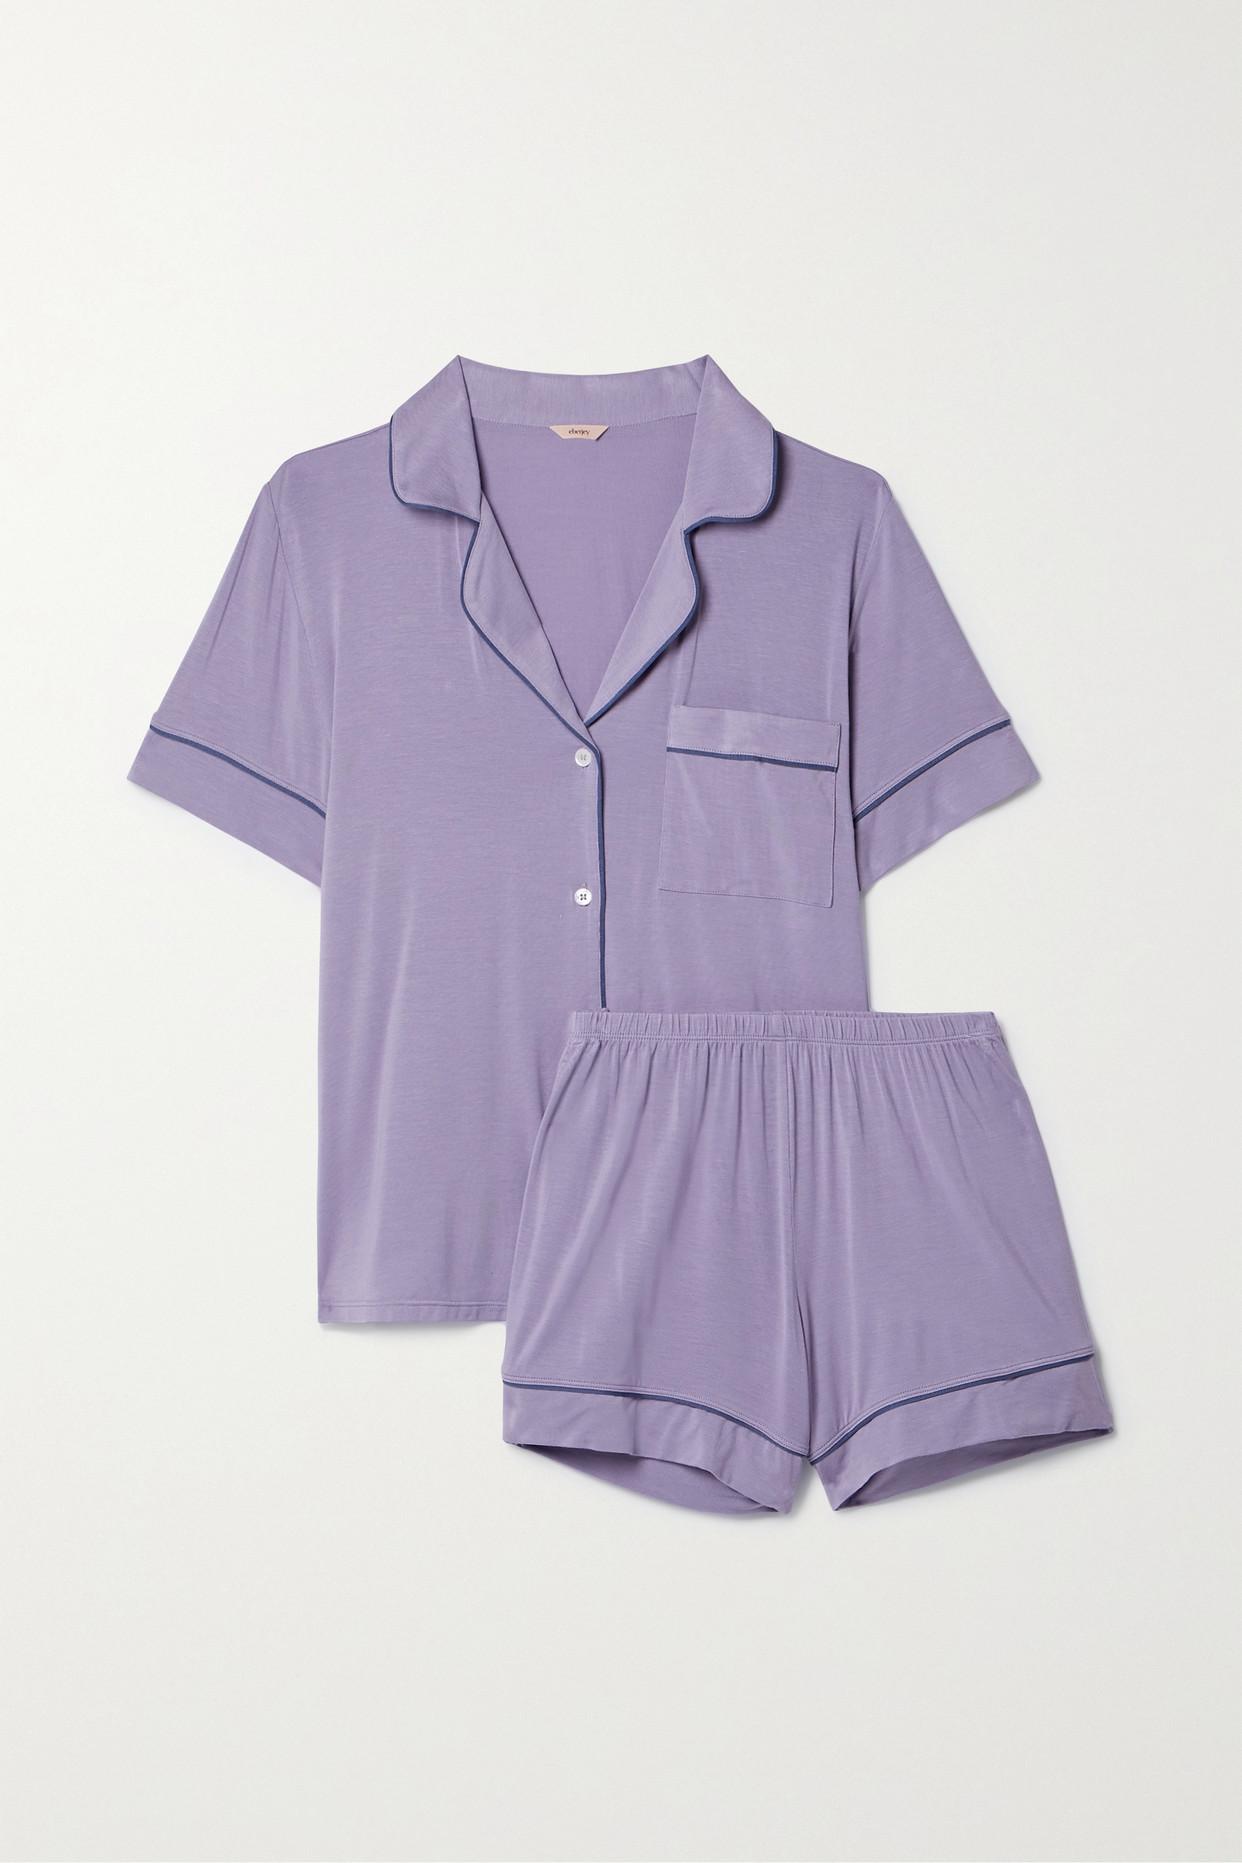 Eberjey + Net Sustain Gisele Stretch-tm Modal Pajama Set in Purple